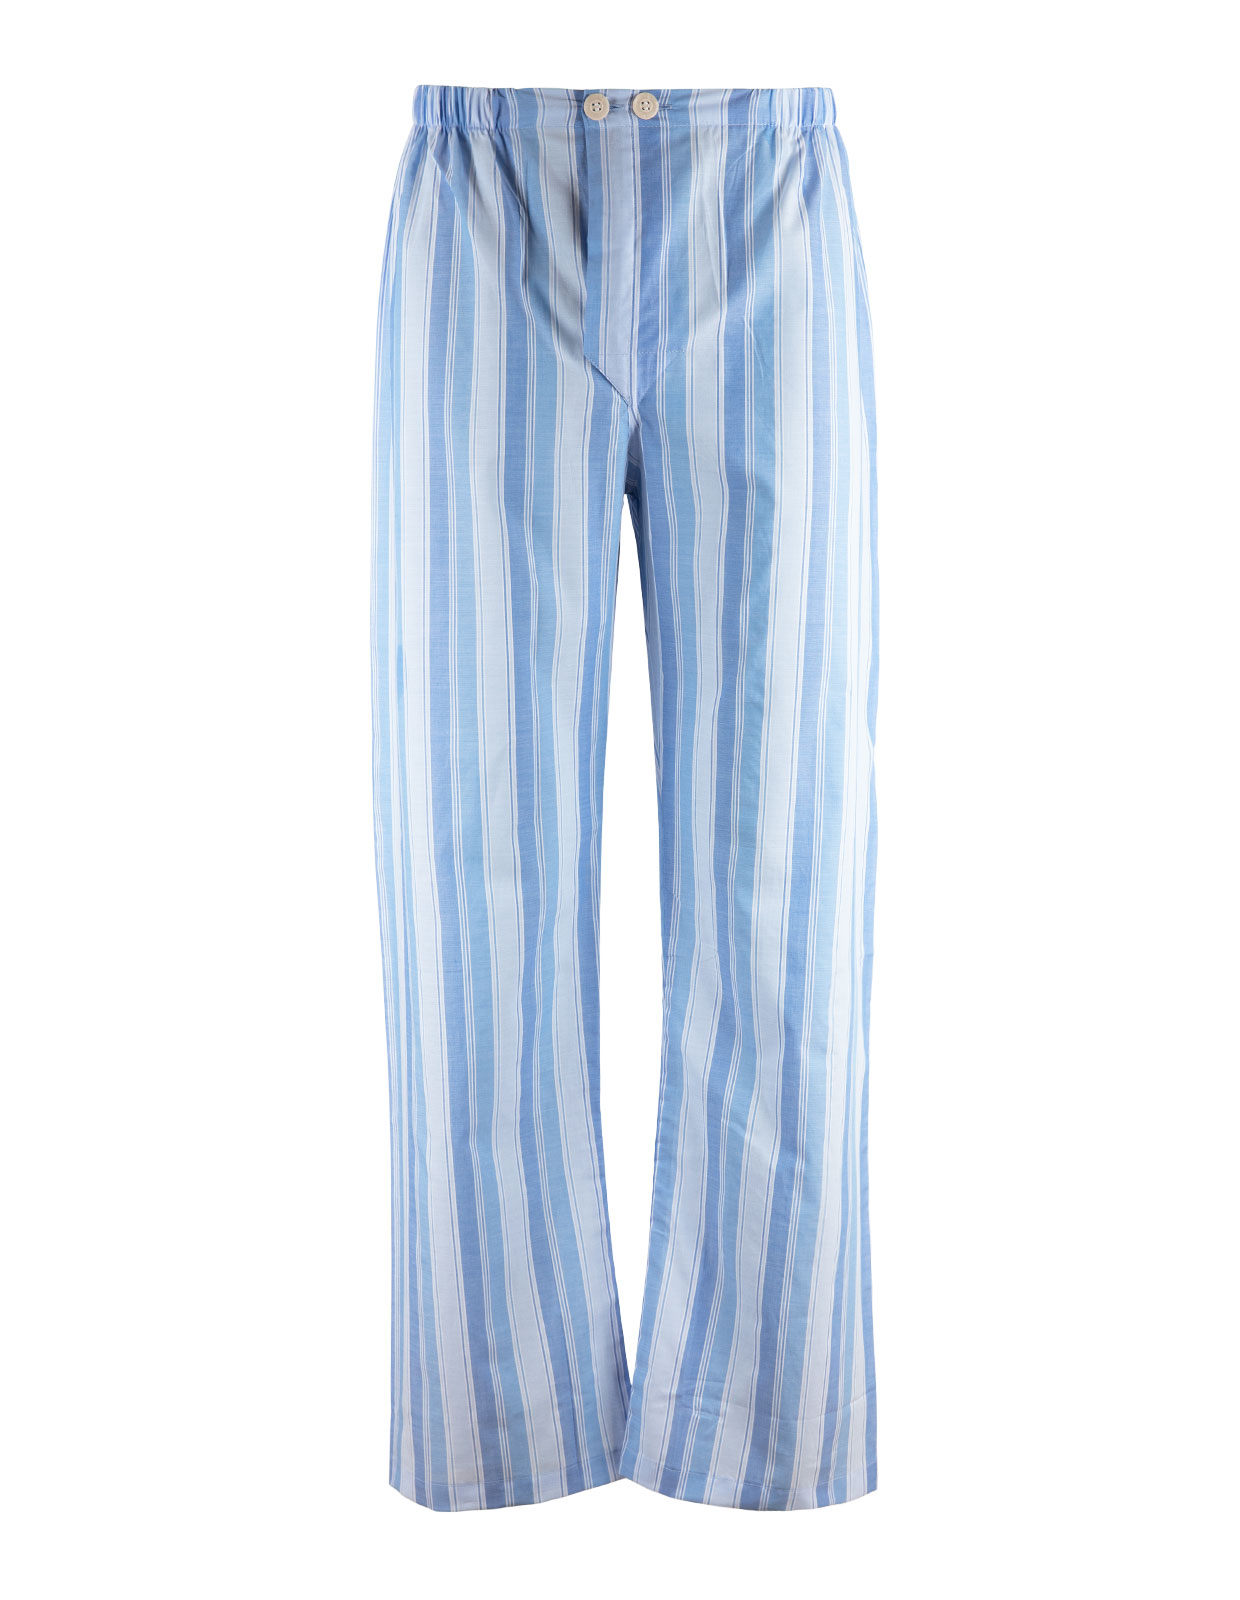 Saville Pyjamas Blå / Vit Stl 56